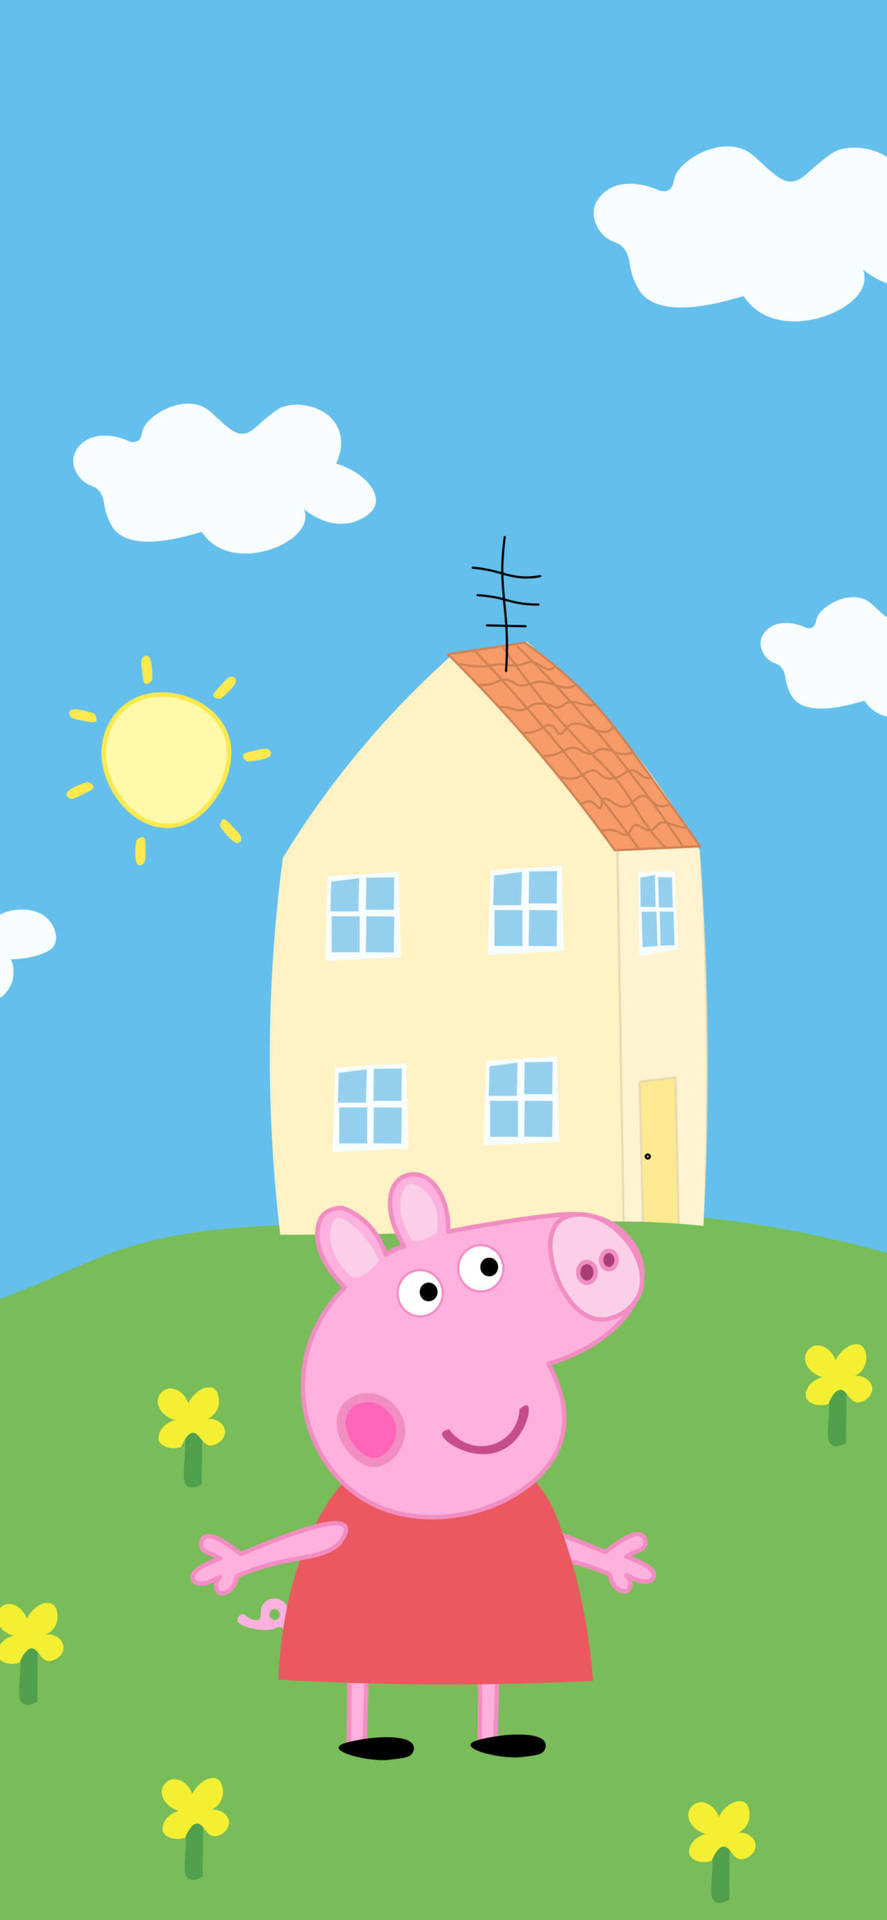 Free Peppa Pig House Wallpaper Downloads, [100+] Peppa Pig House Wallpapers  for FREE 